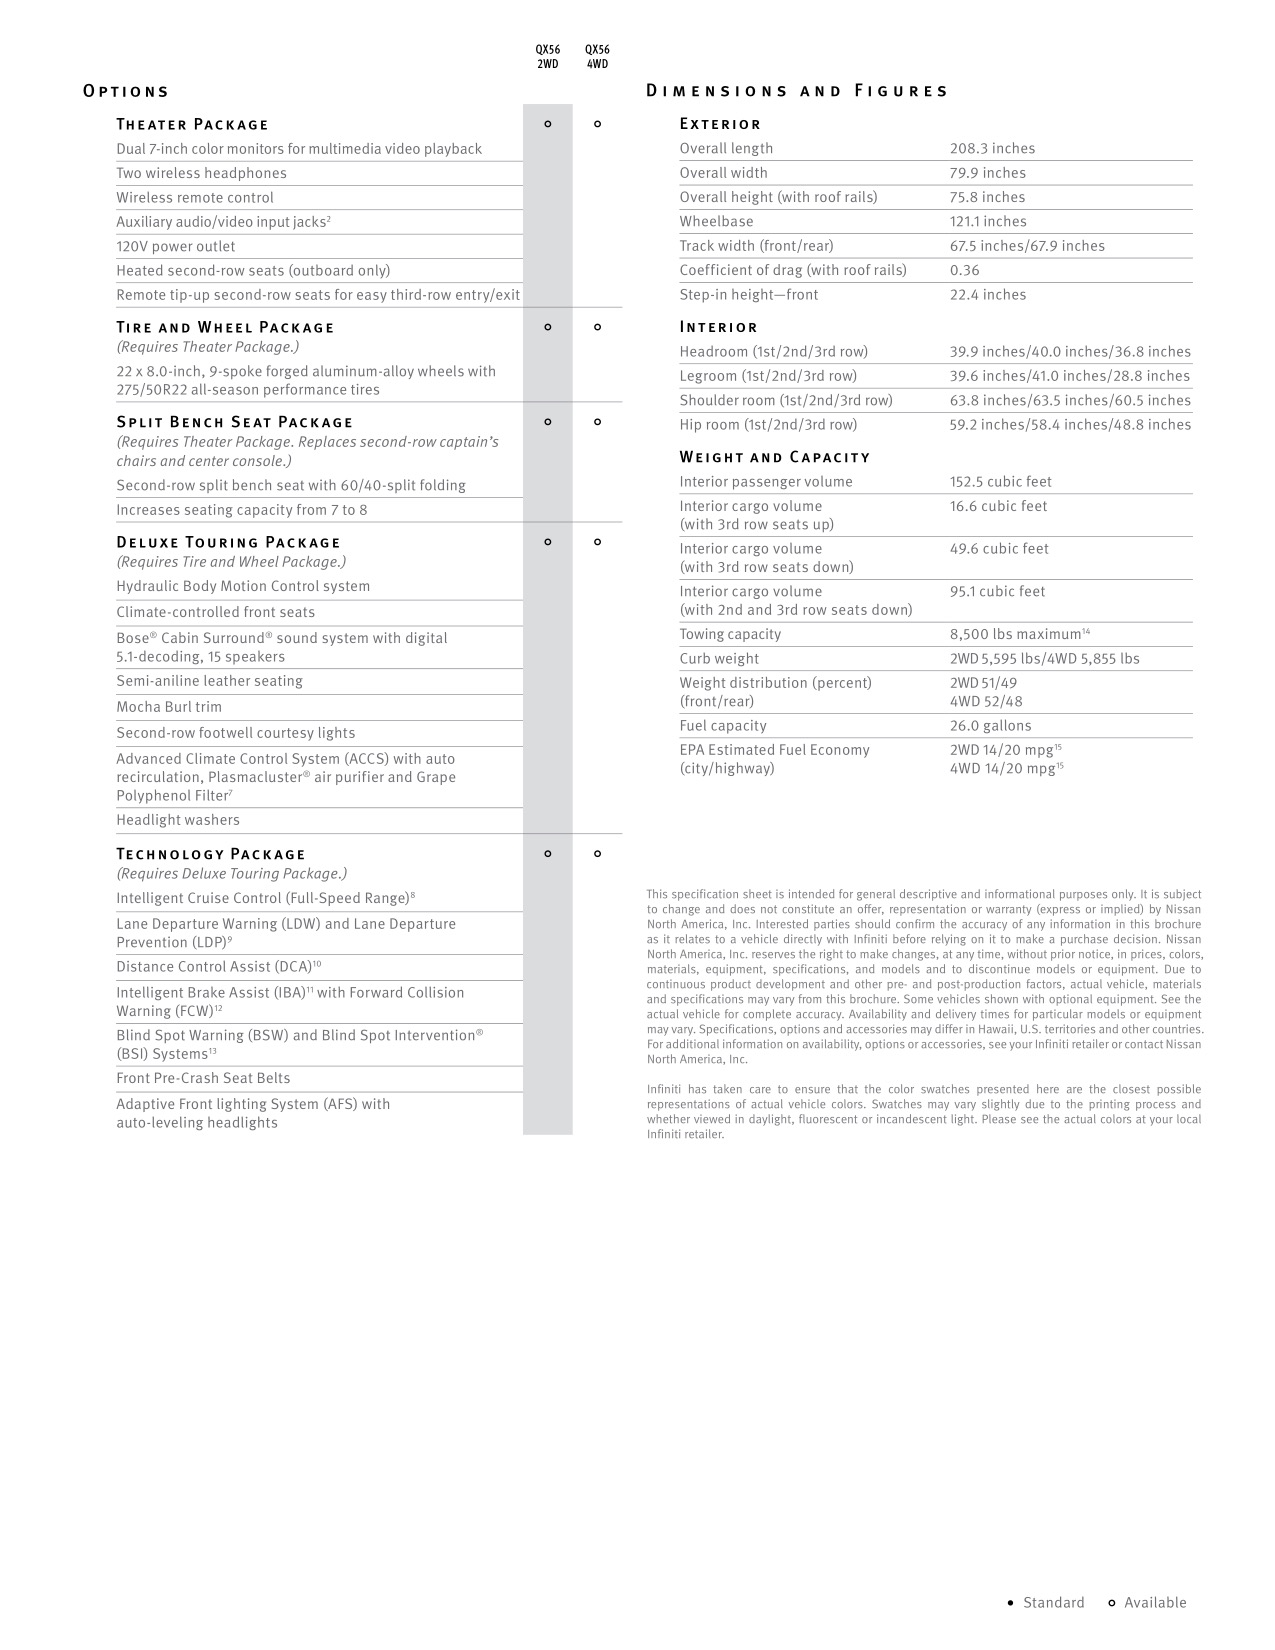 2013 Infiniti QX56 Brochure Page 7